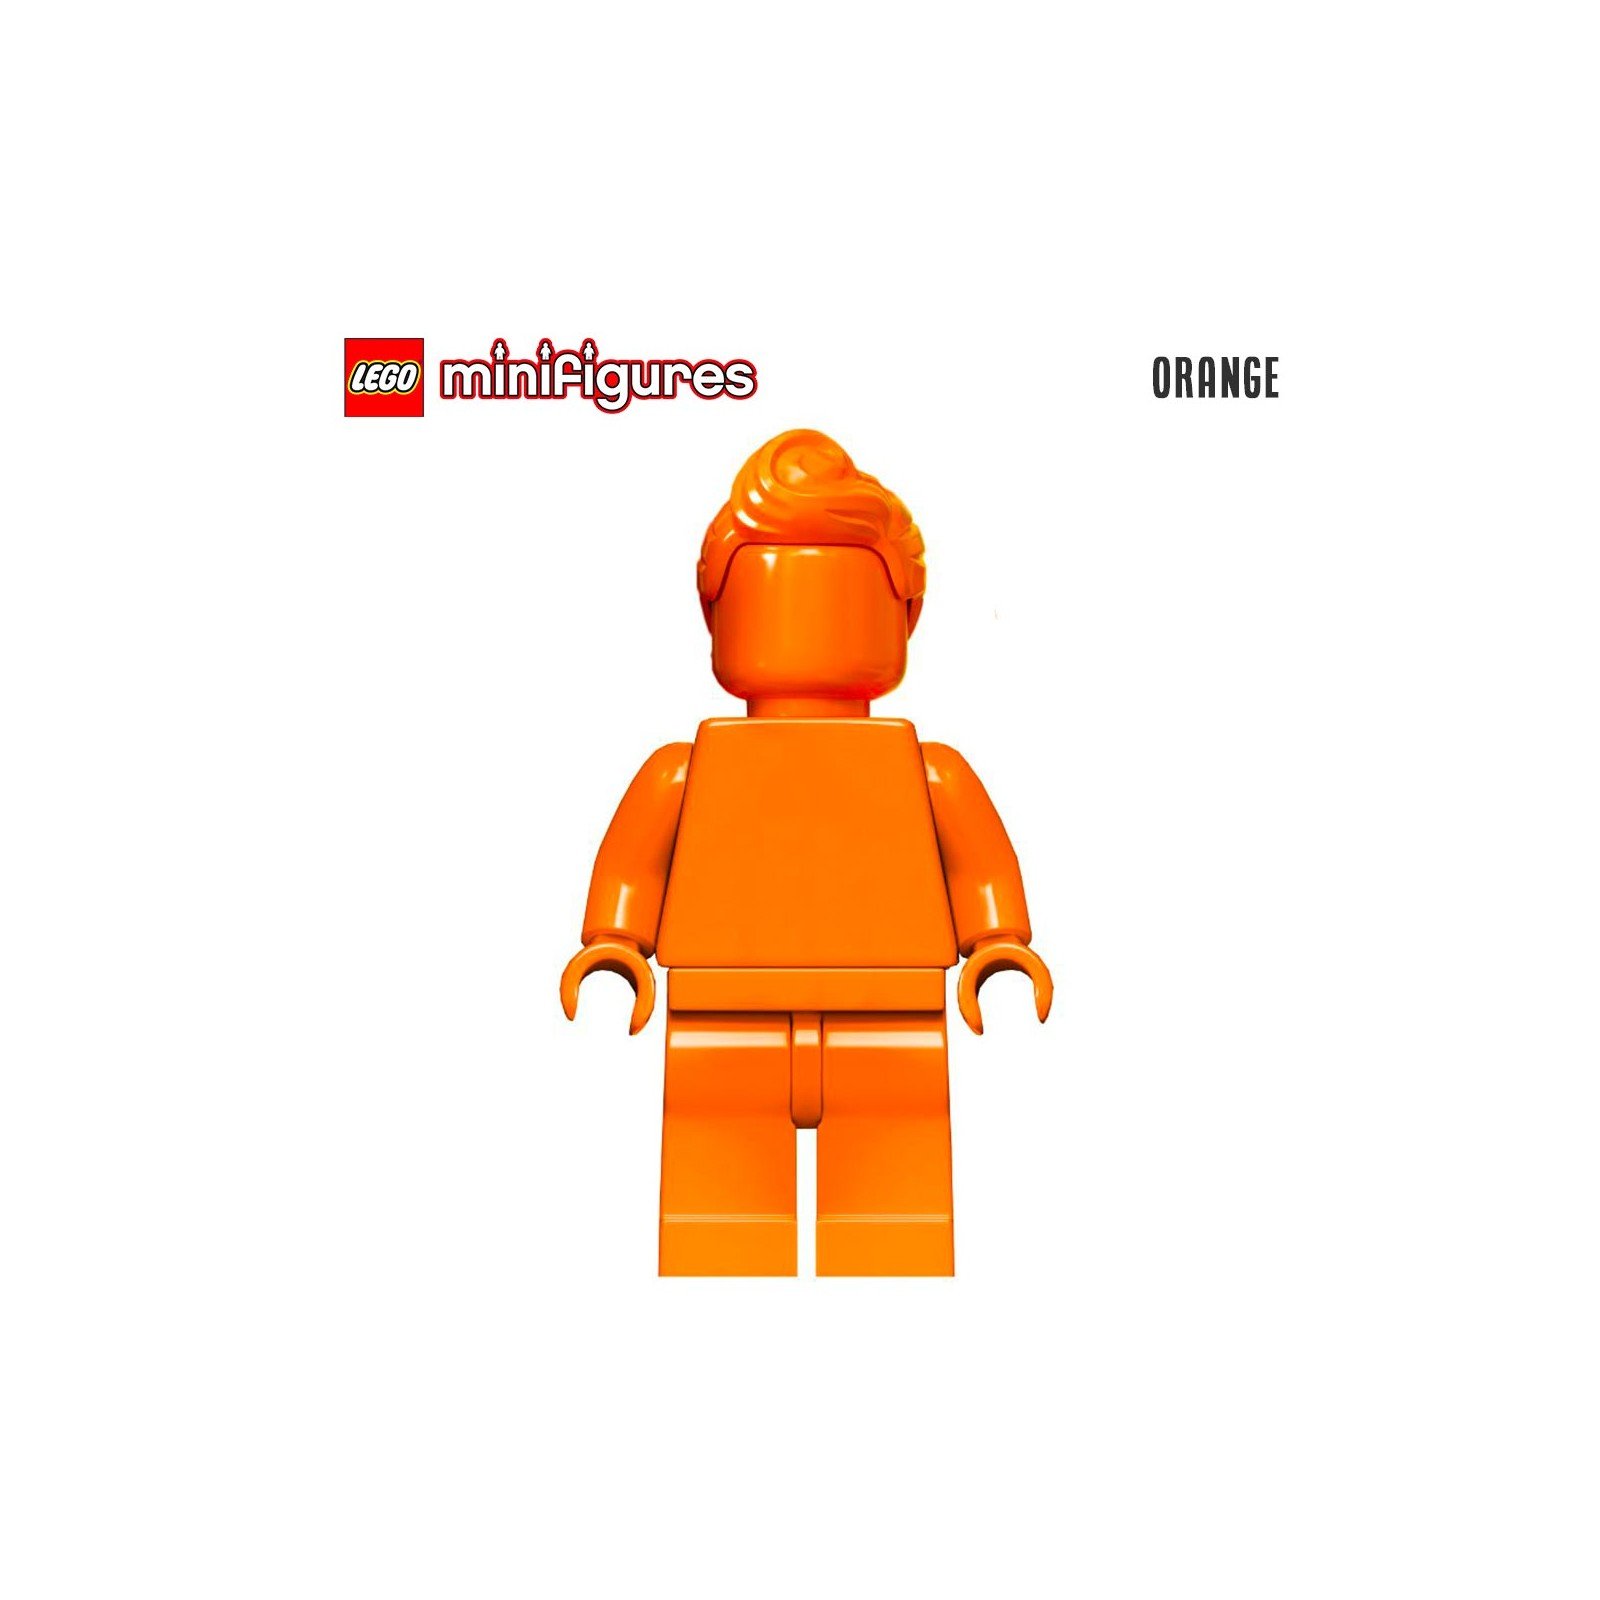 LEGO Orange MONOFIG (Monochrome Minifigure)